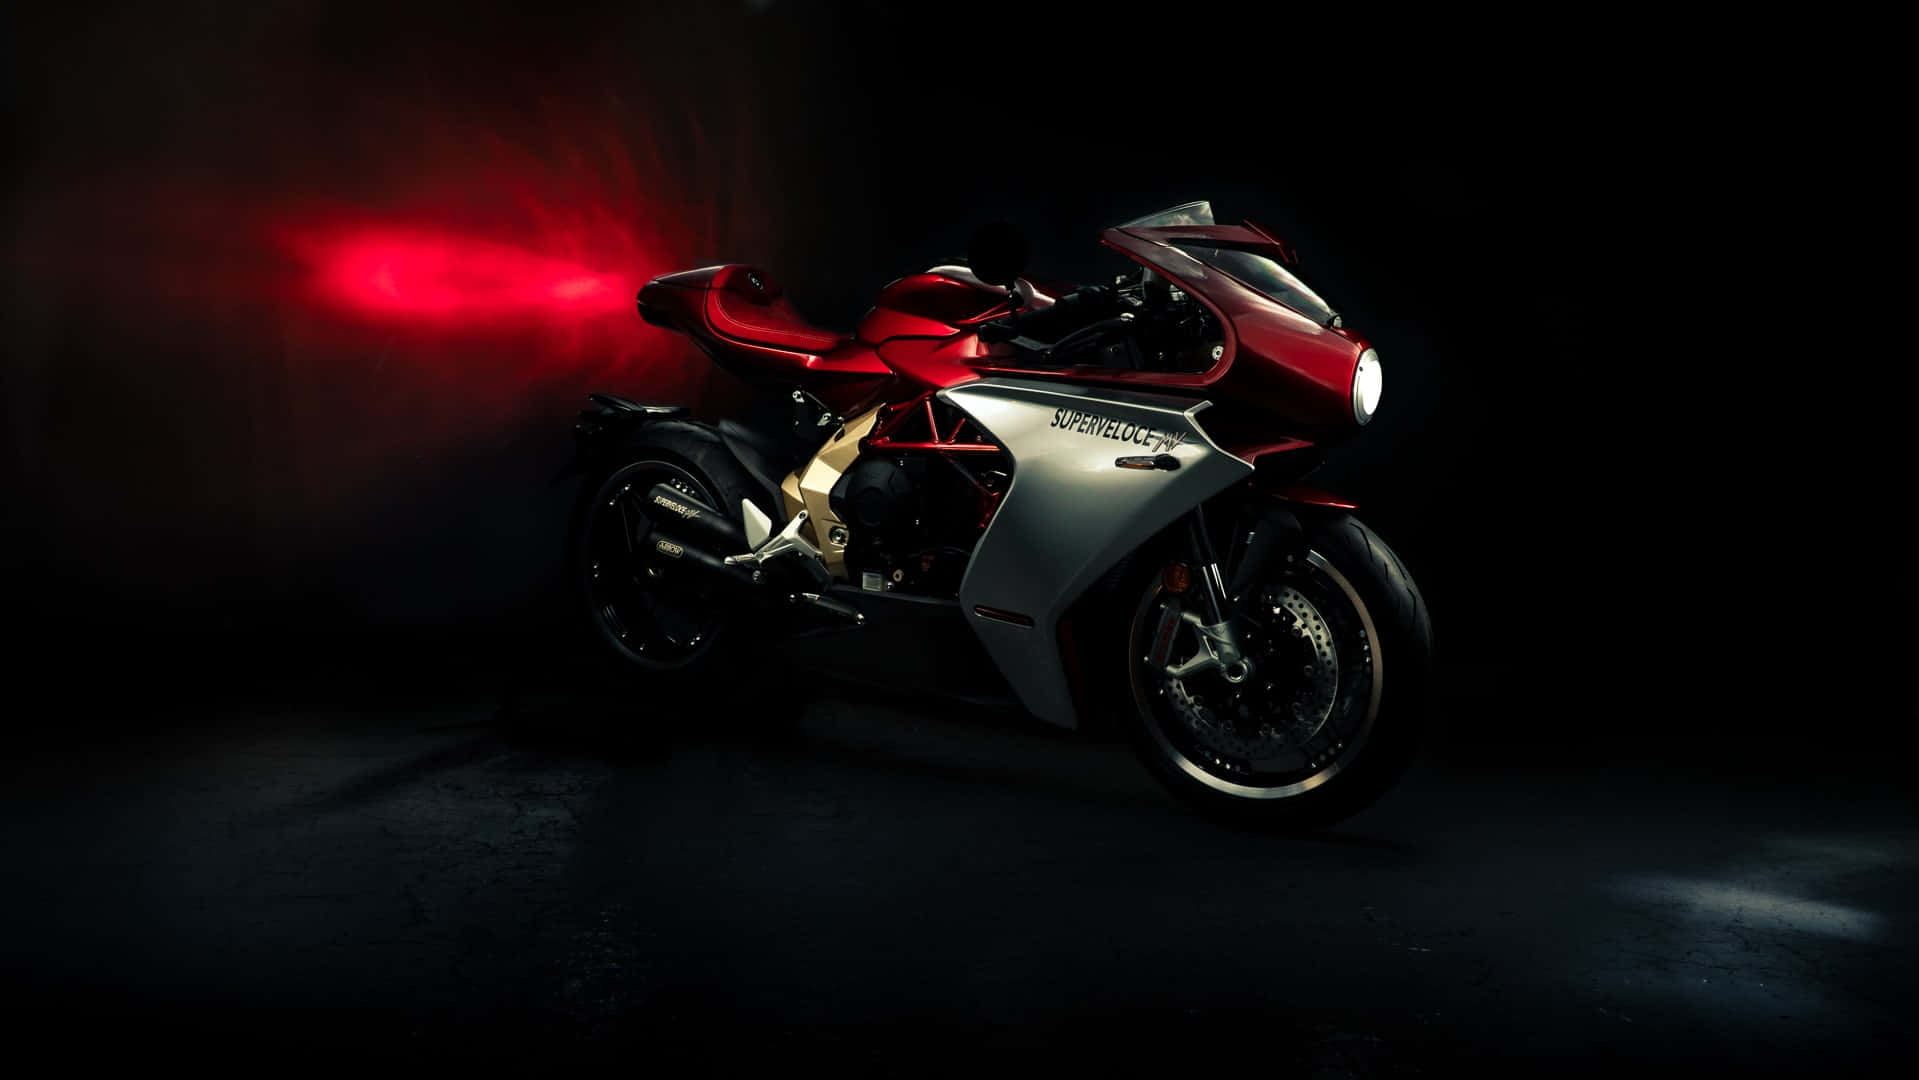 Caption: Breathtaking Power - Mv Agusta Motorcycle In Action Wallpaper